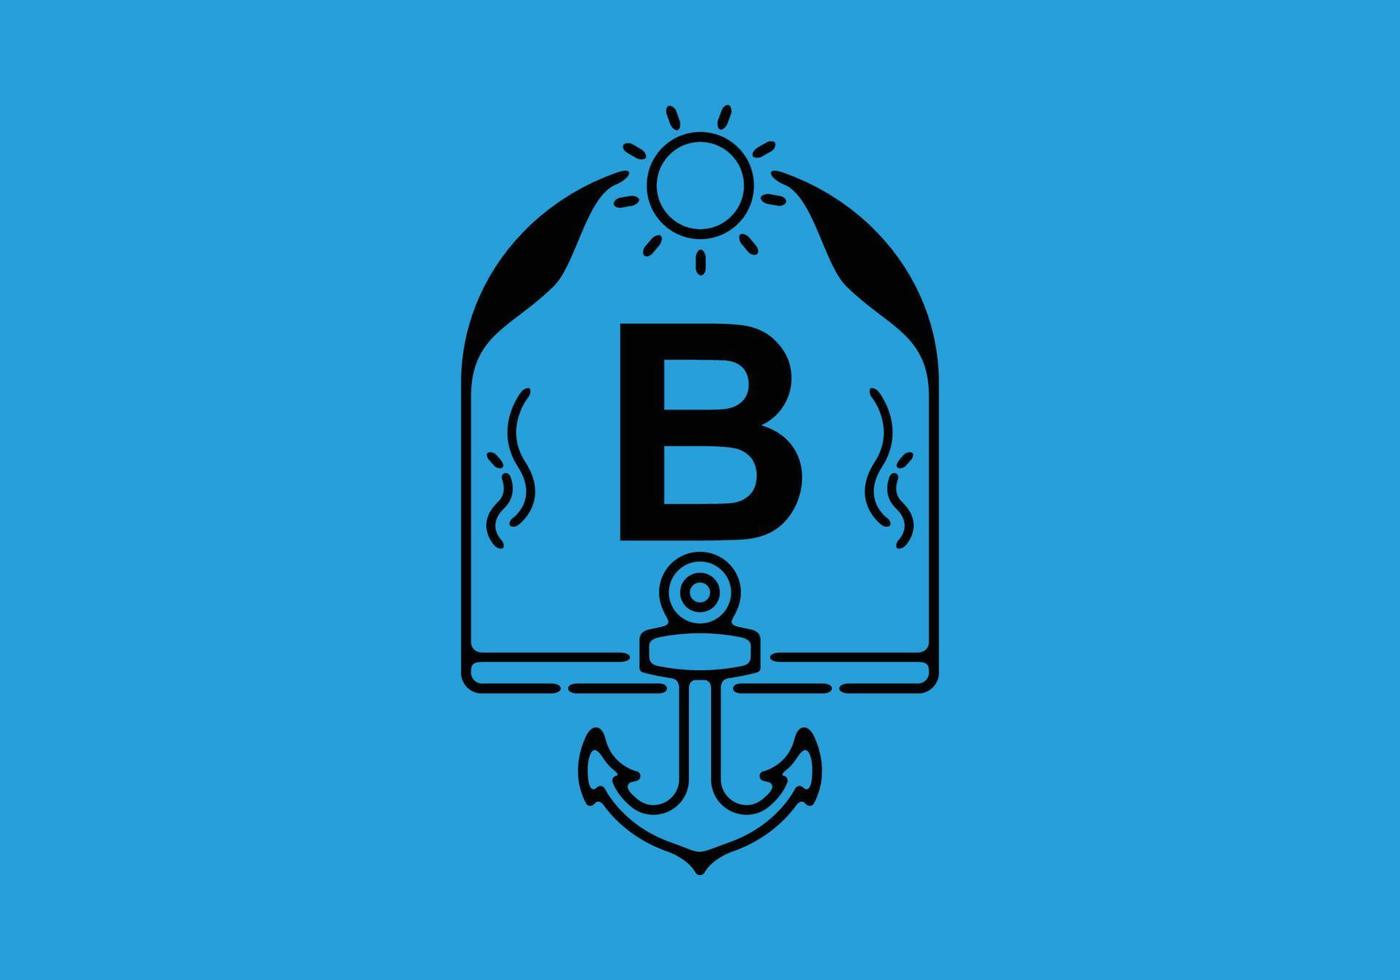 schwarze linie kunstillustration des b-anfangsbuchstabens im ankerrahmen vektor